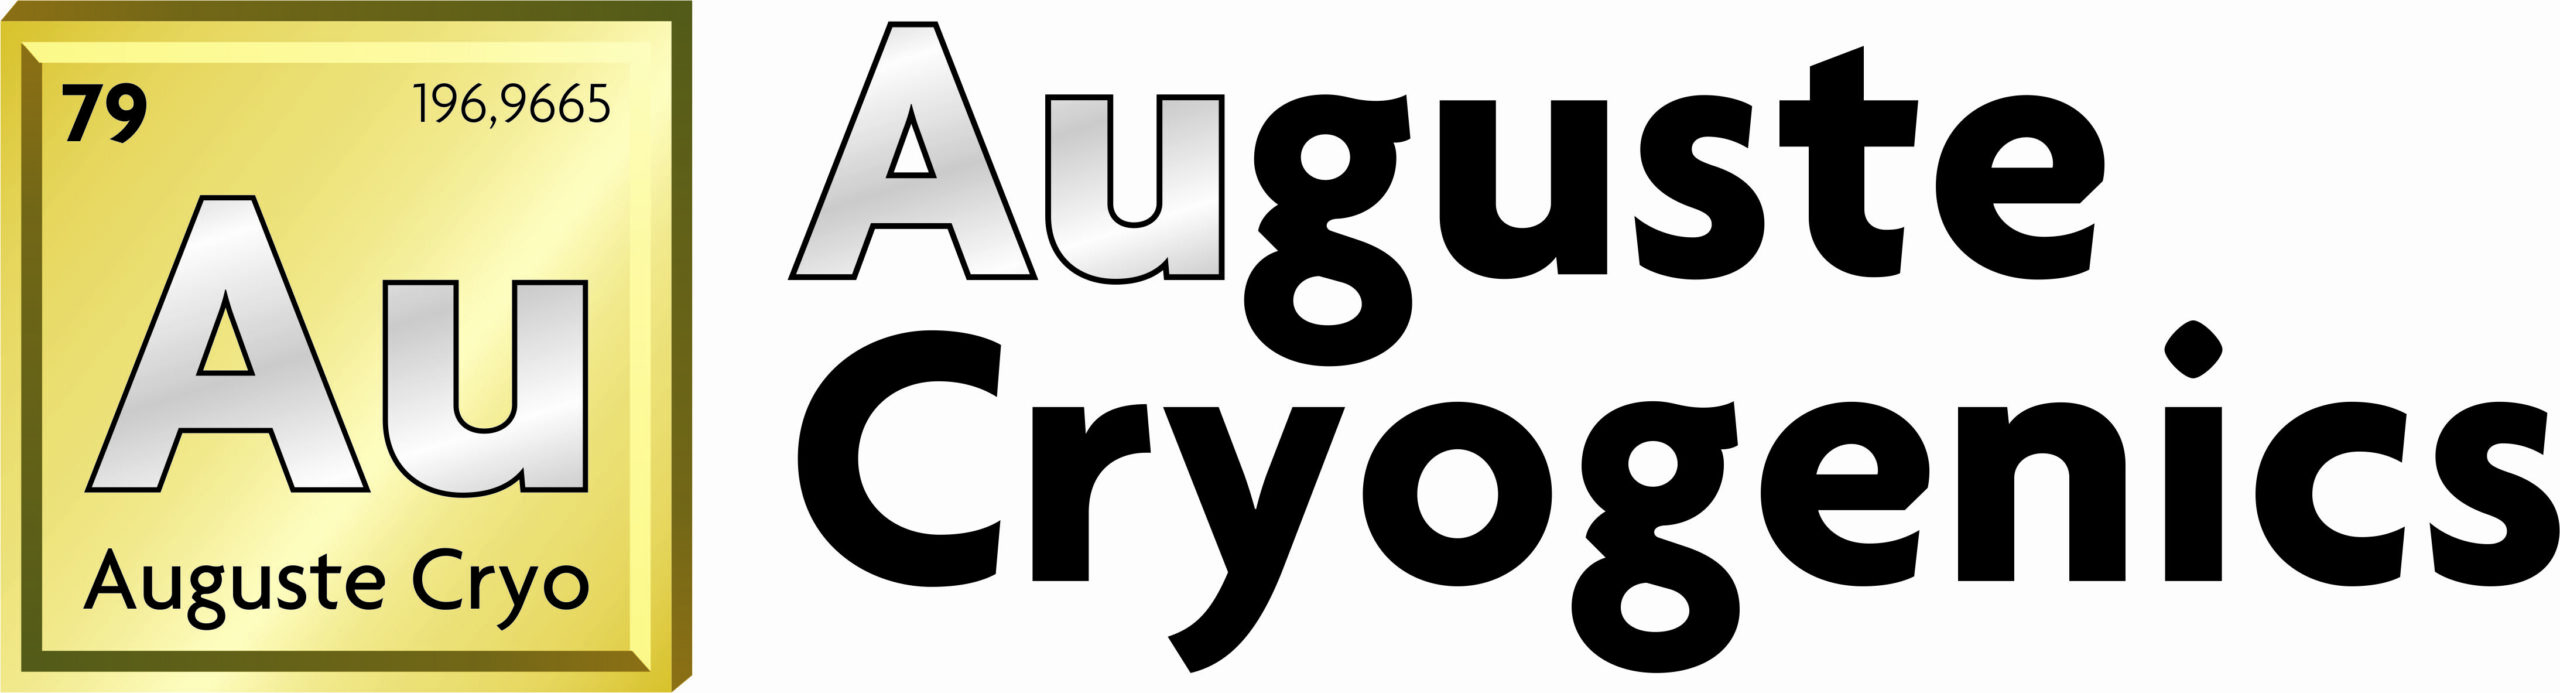 Auguste Cryogenics - logo